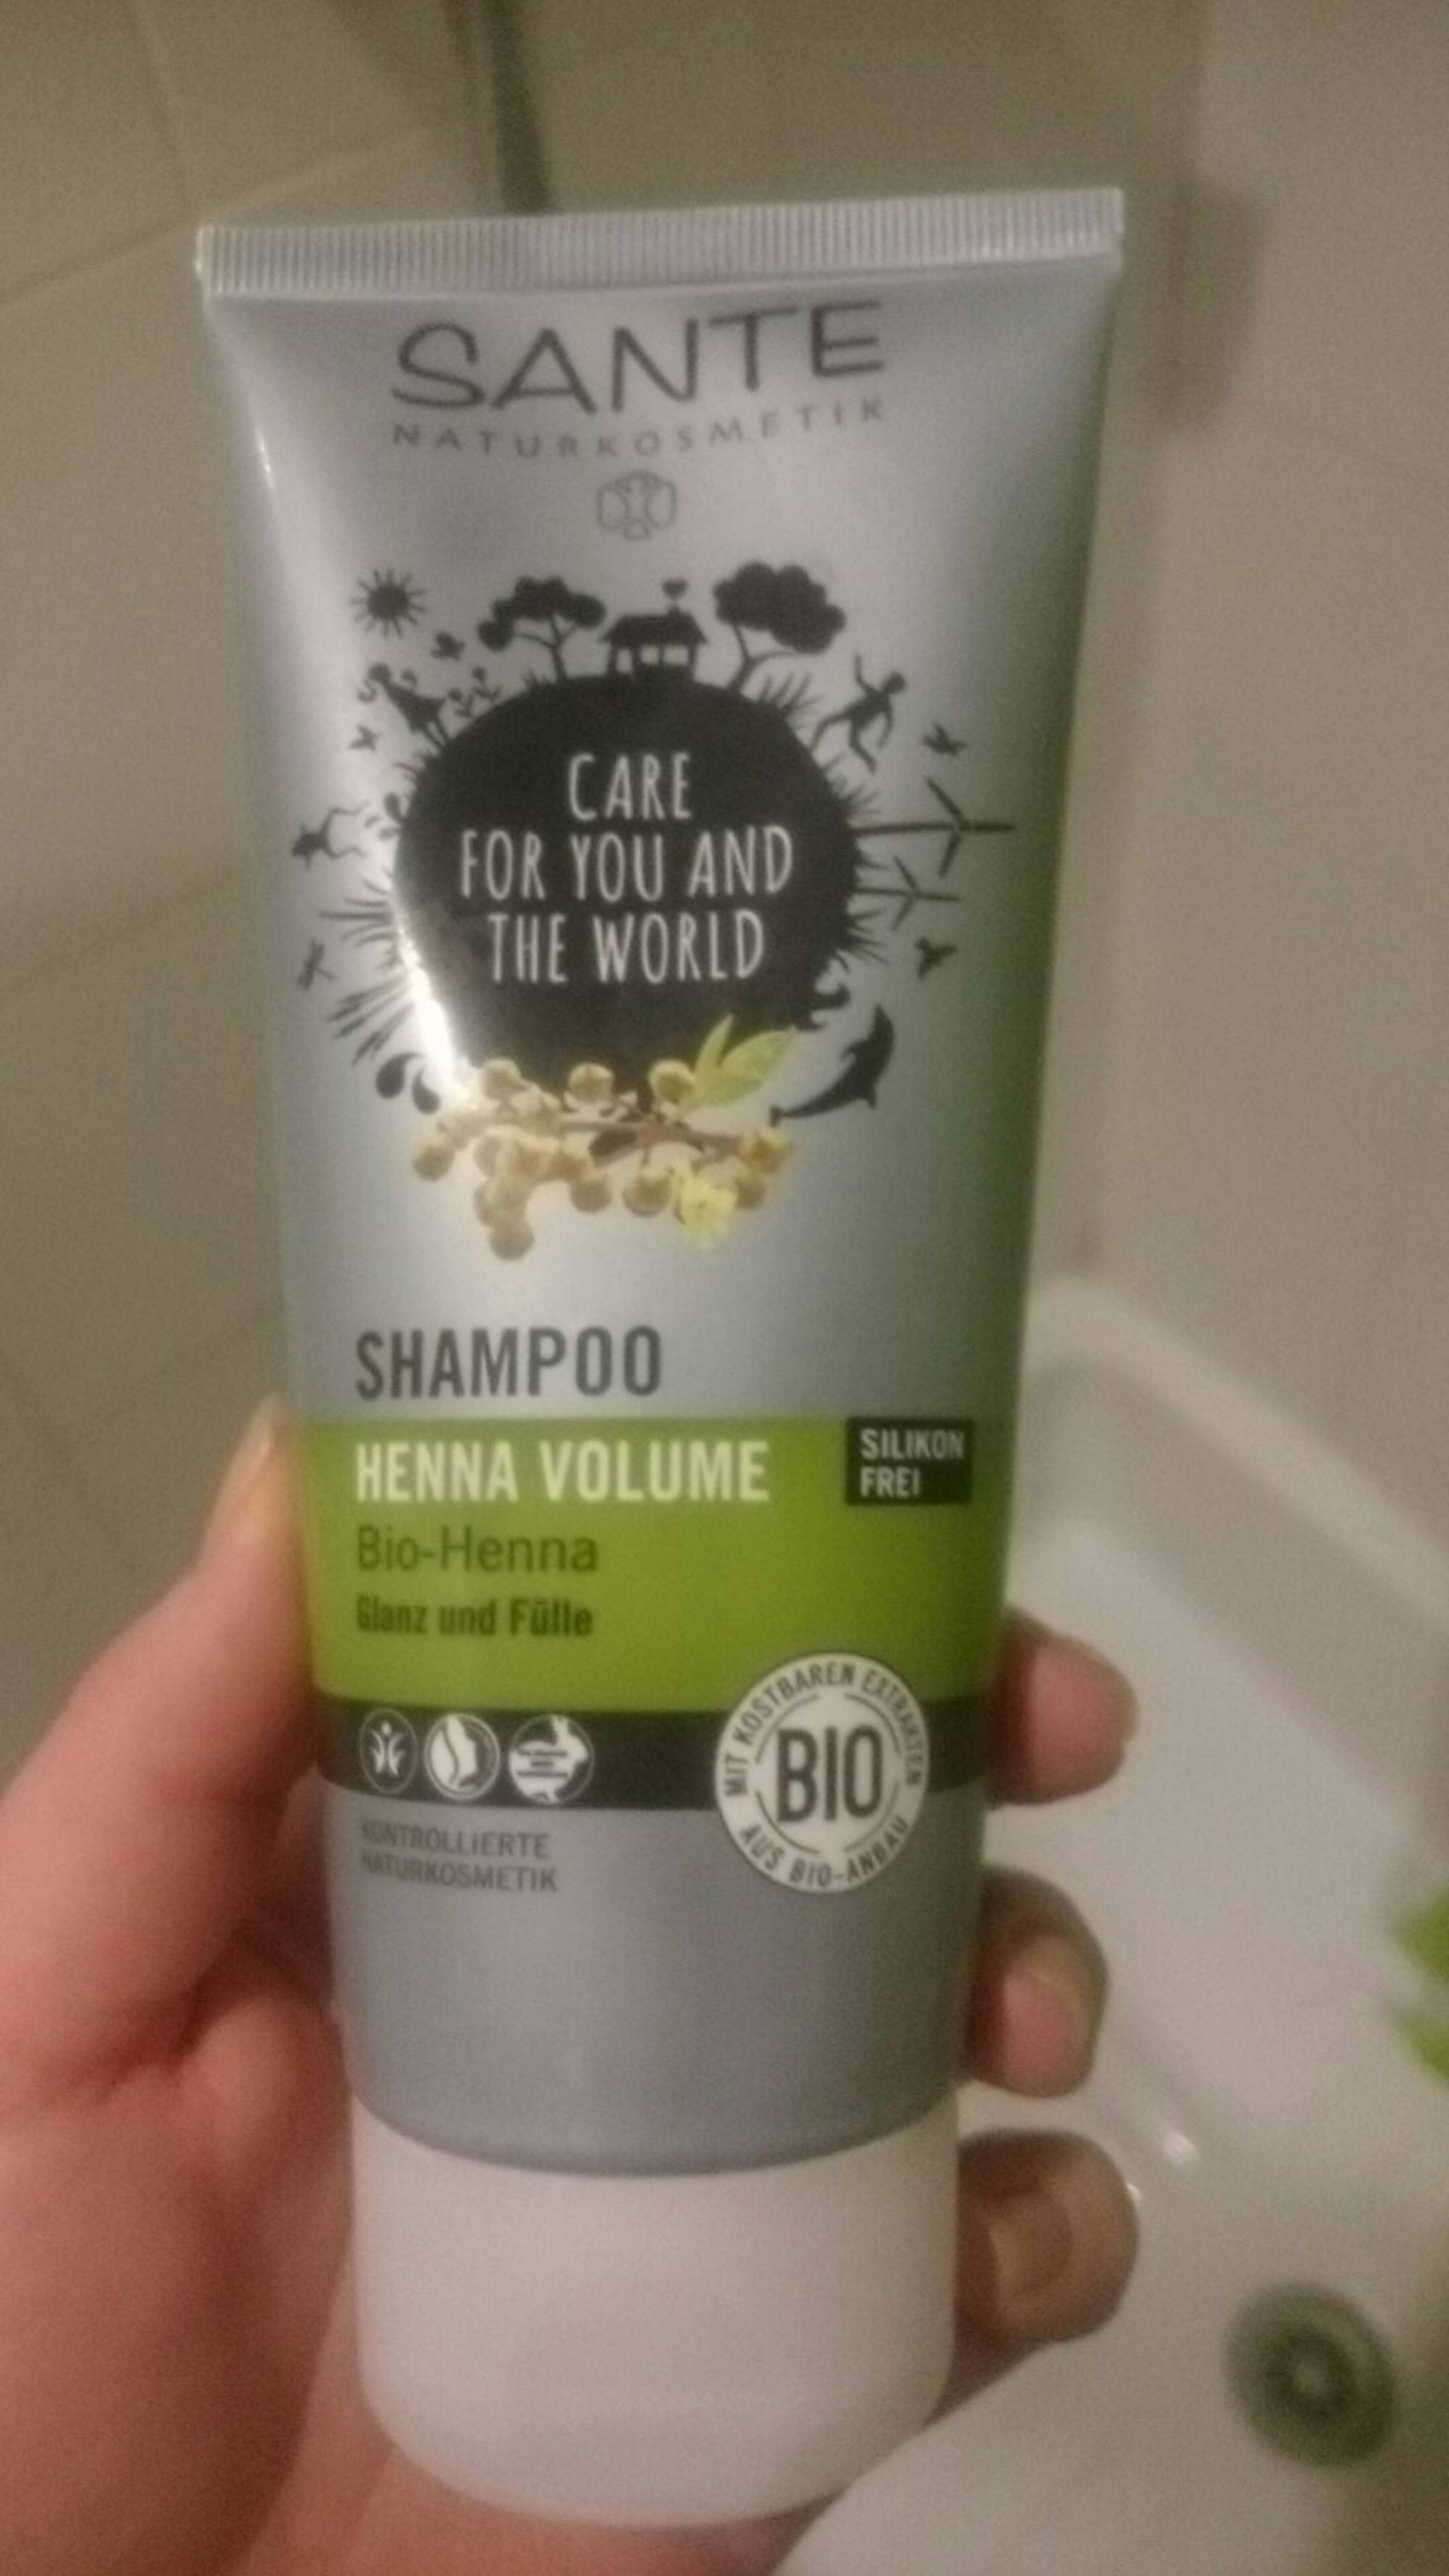 SANTE NATURKOSMETIK - Henna volume - Shampoo